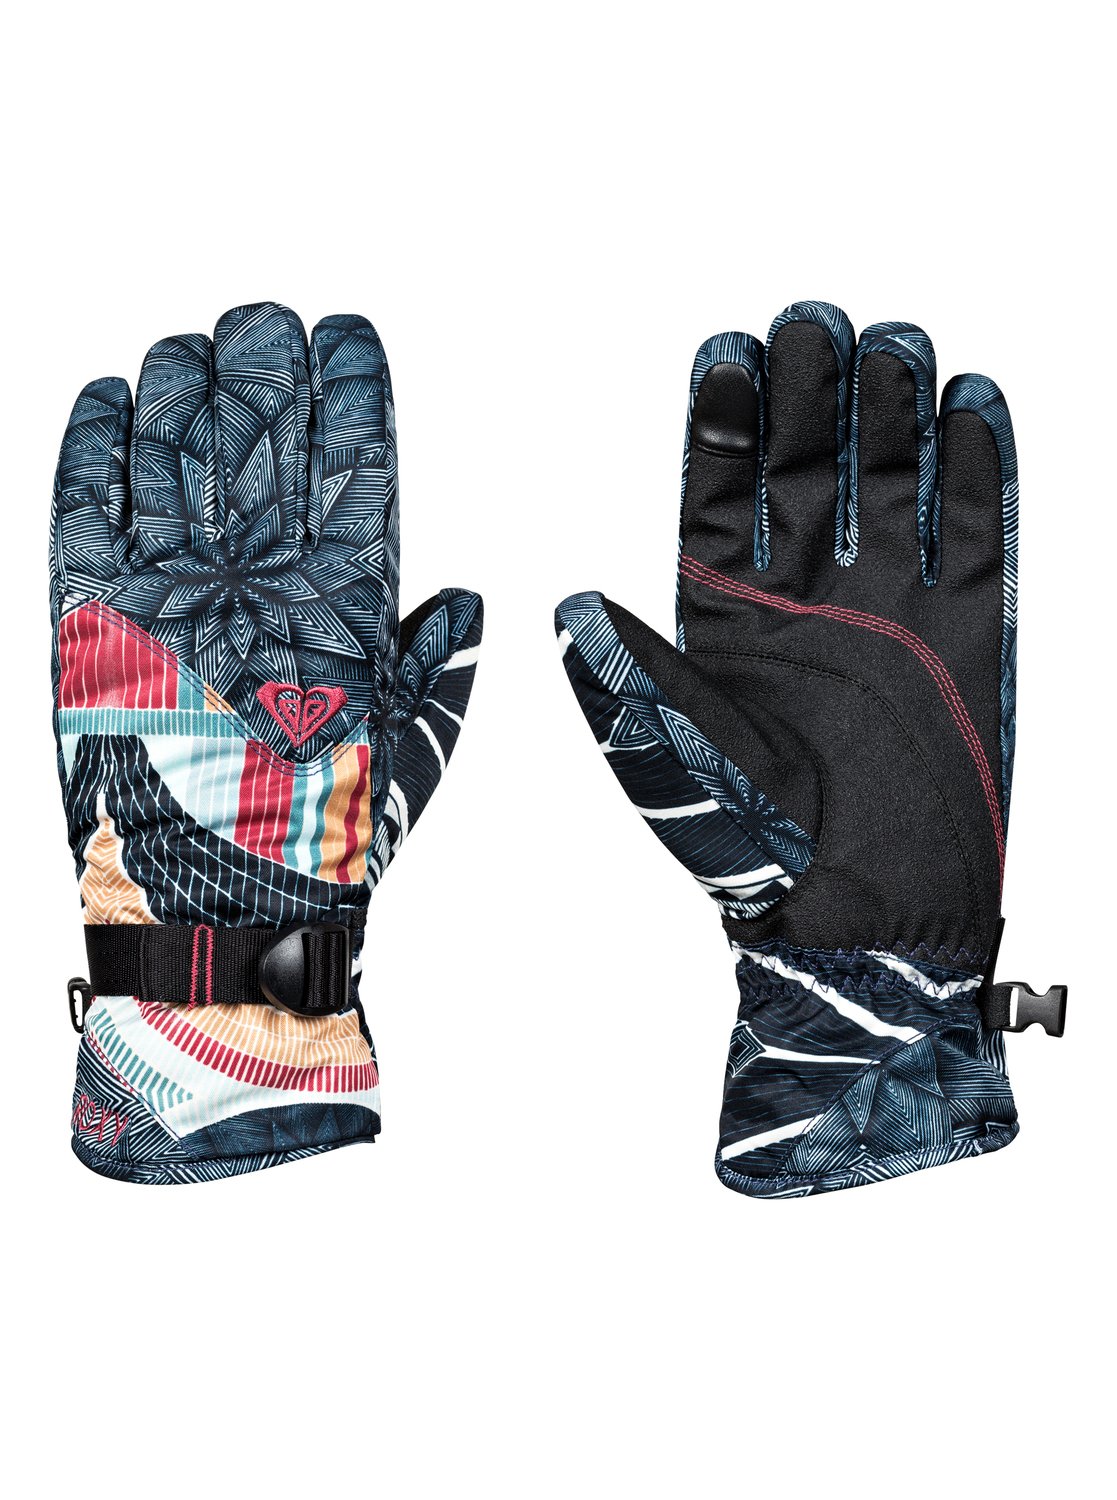 ROXY Jetty SE Ski/Snowboard Gloves